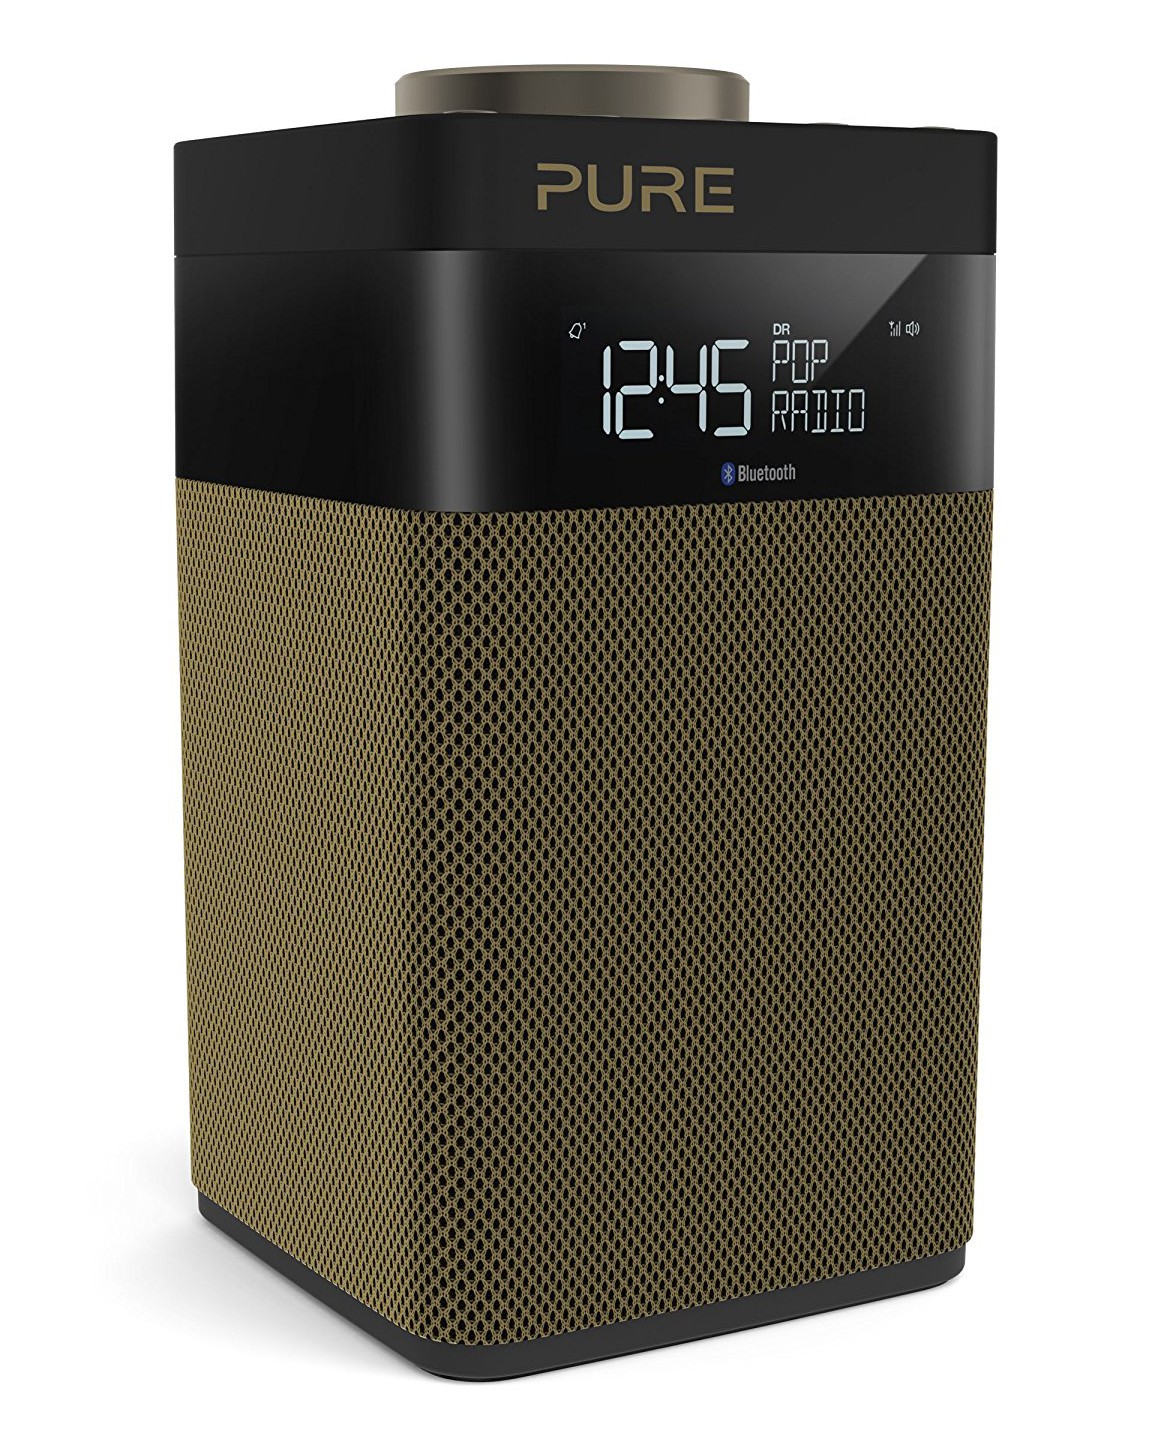 Trafikprop Bryde igennem favorit Pure - Pop Midi S - Gold - Compact and Portable DAB/DAB+/FM Radio with  Bluetooth - High Quality Digital Radio - Avvenice